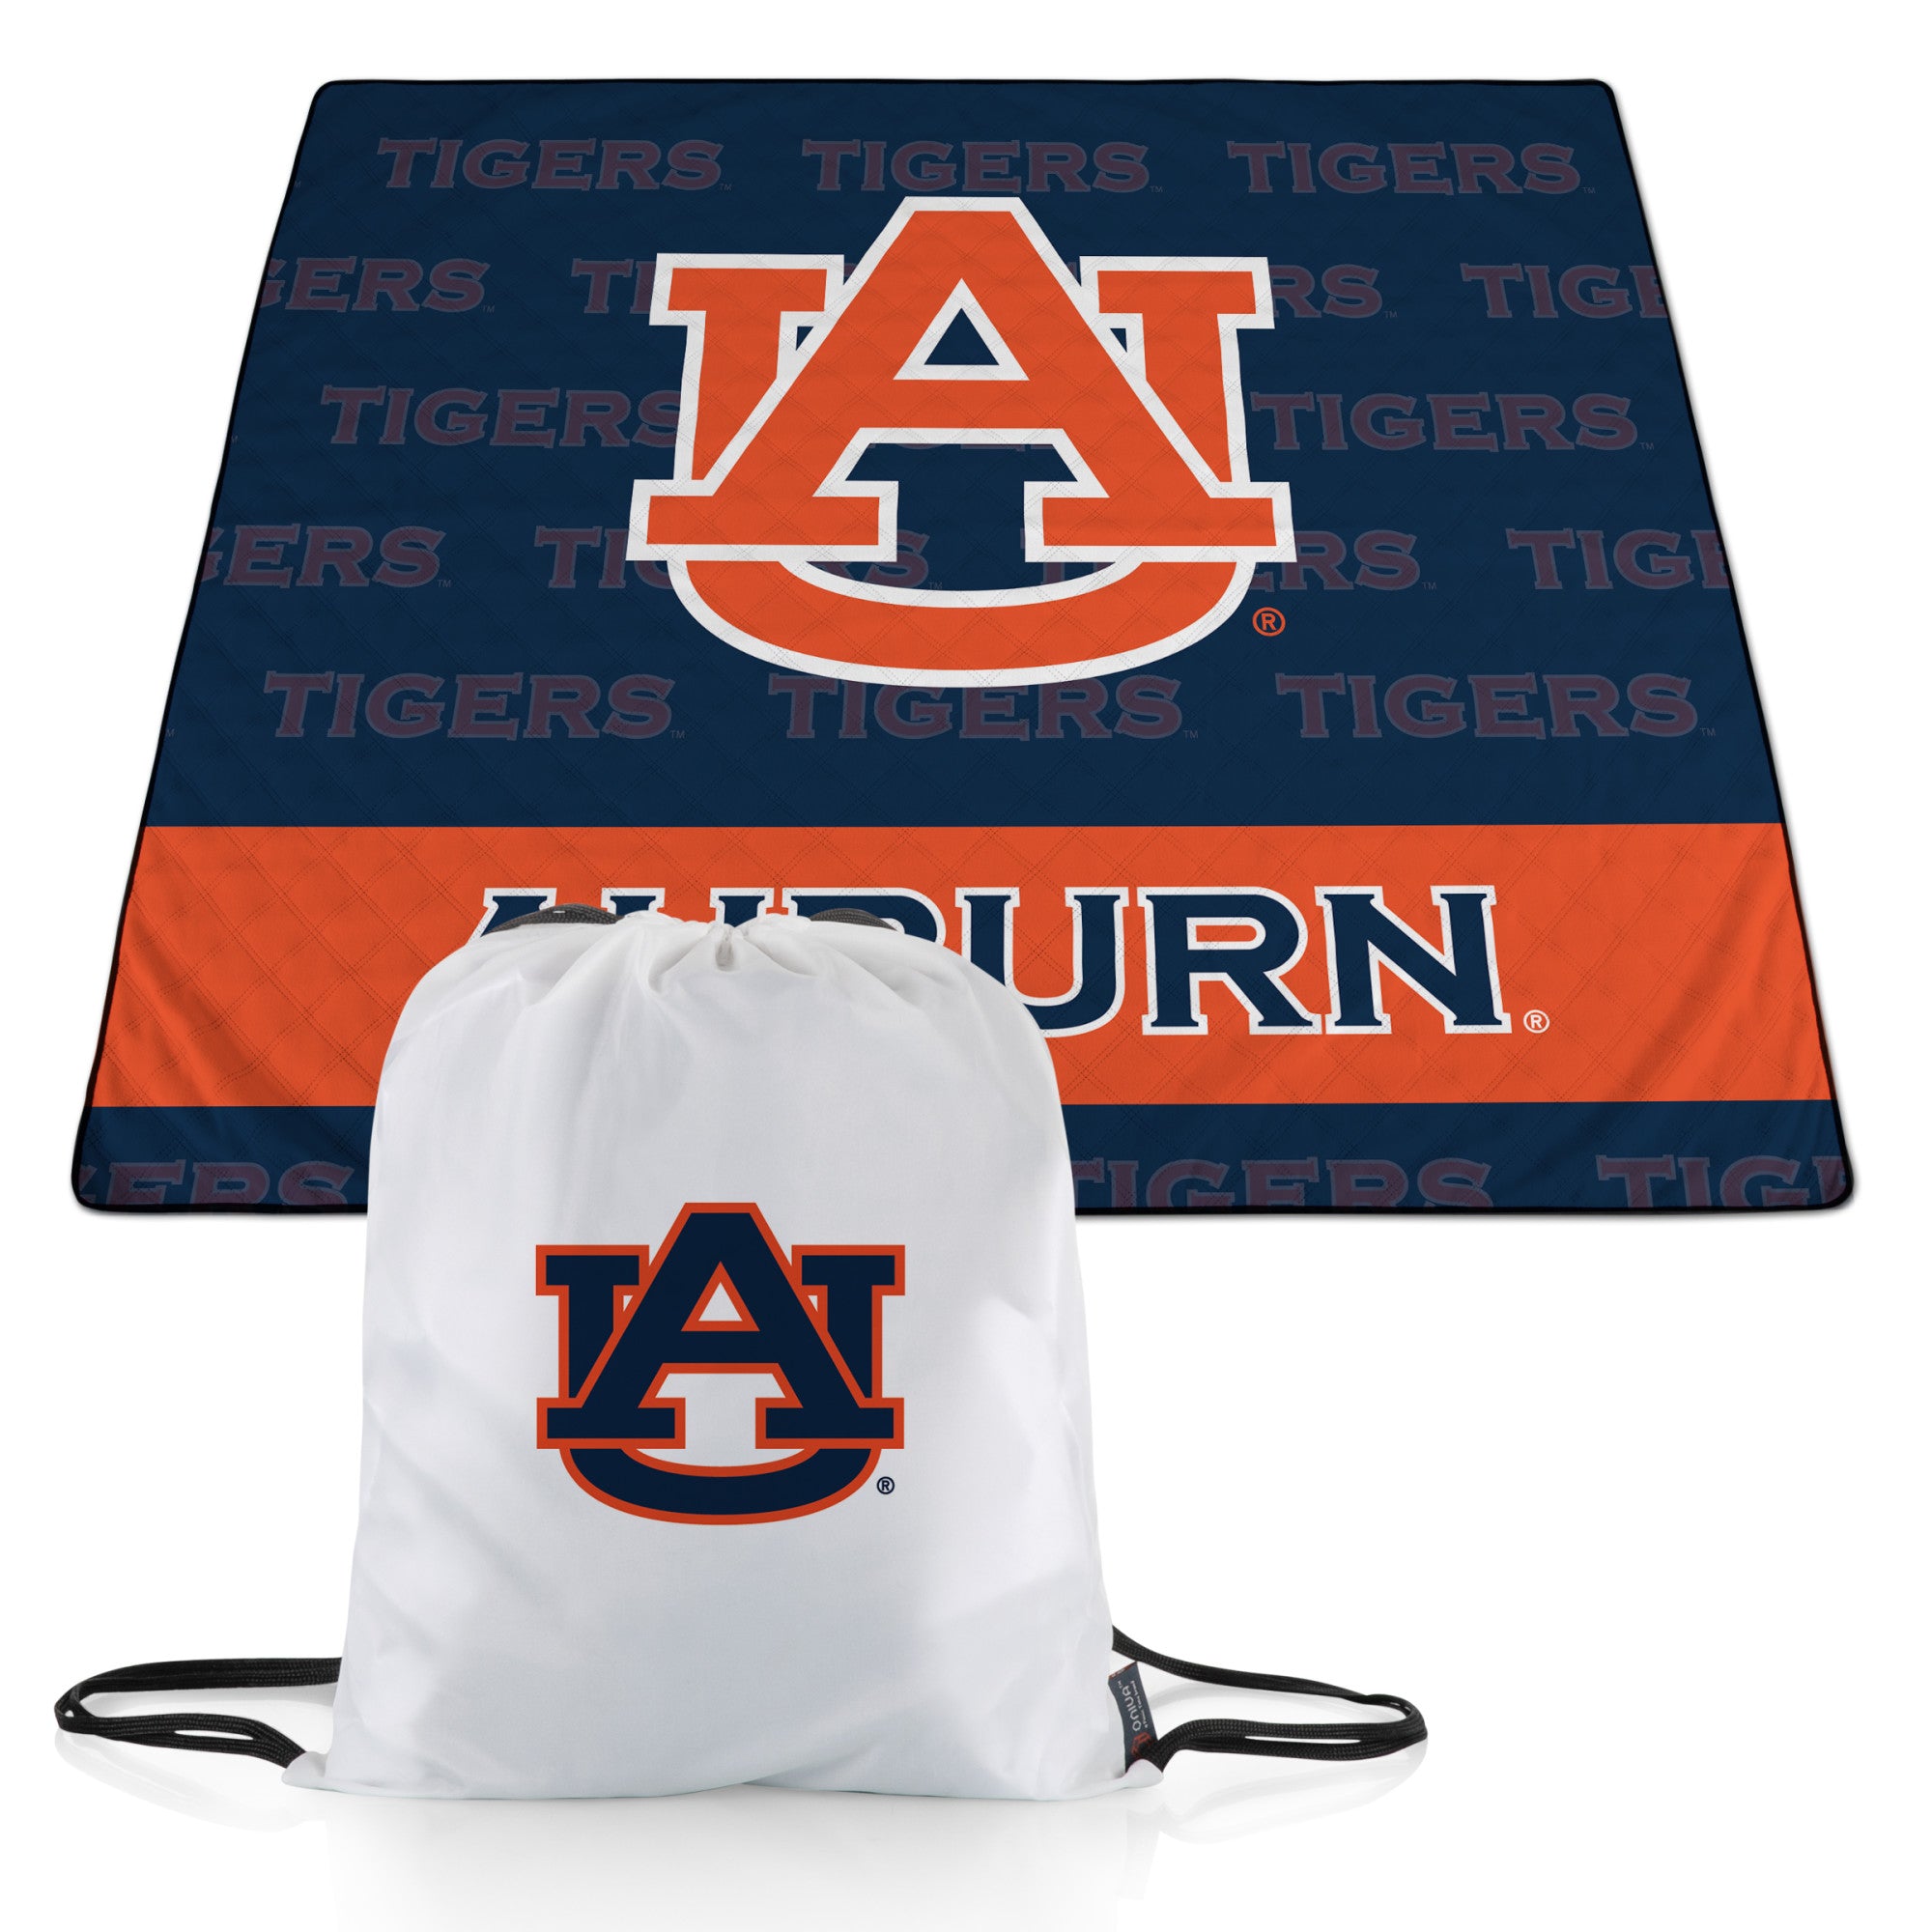 Auburn Tigers - Impresa Picnic Blanket